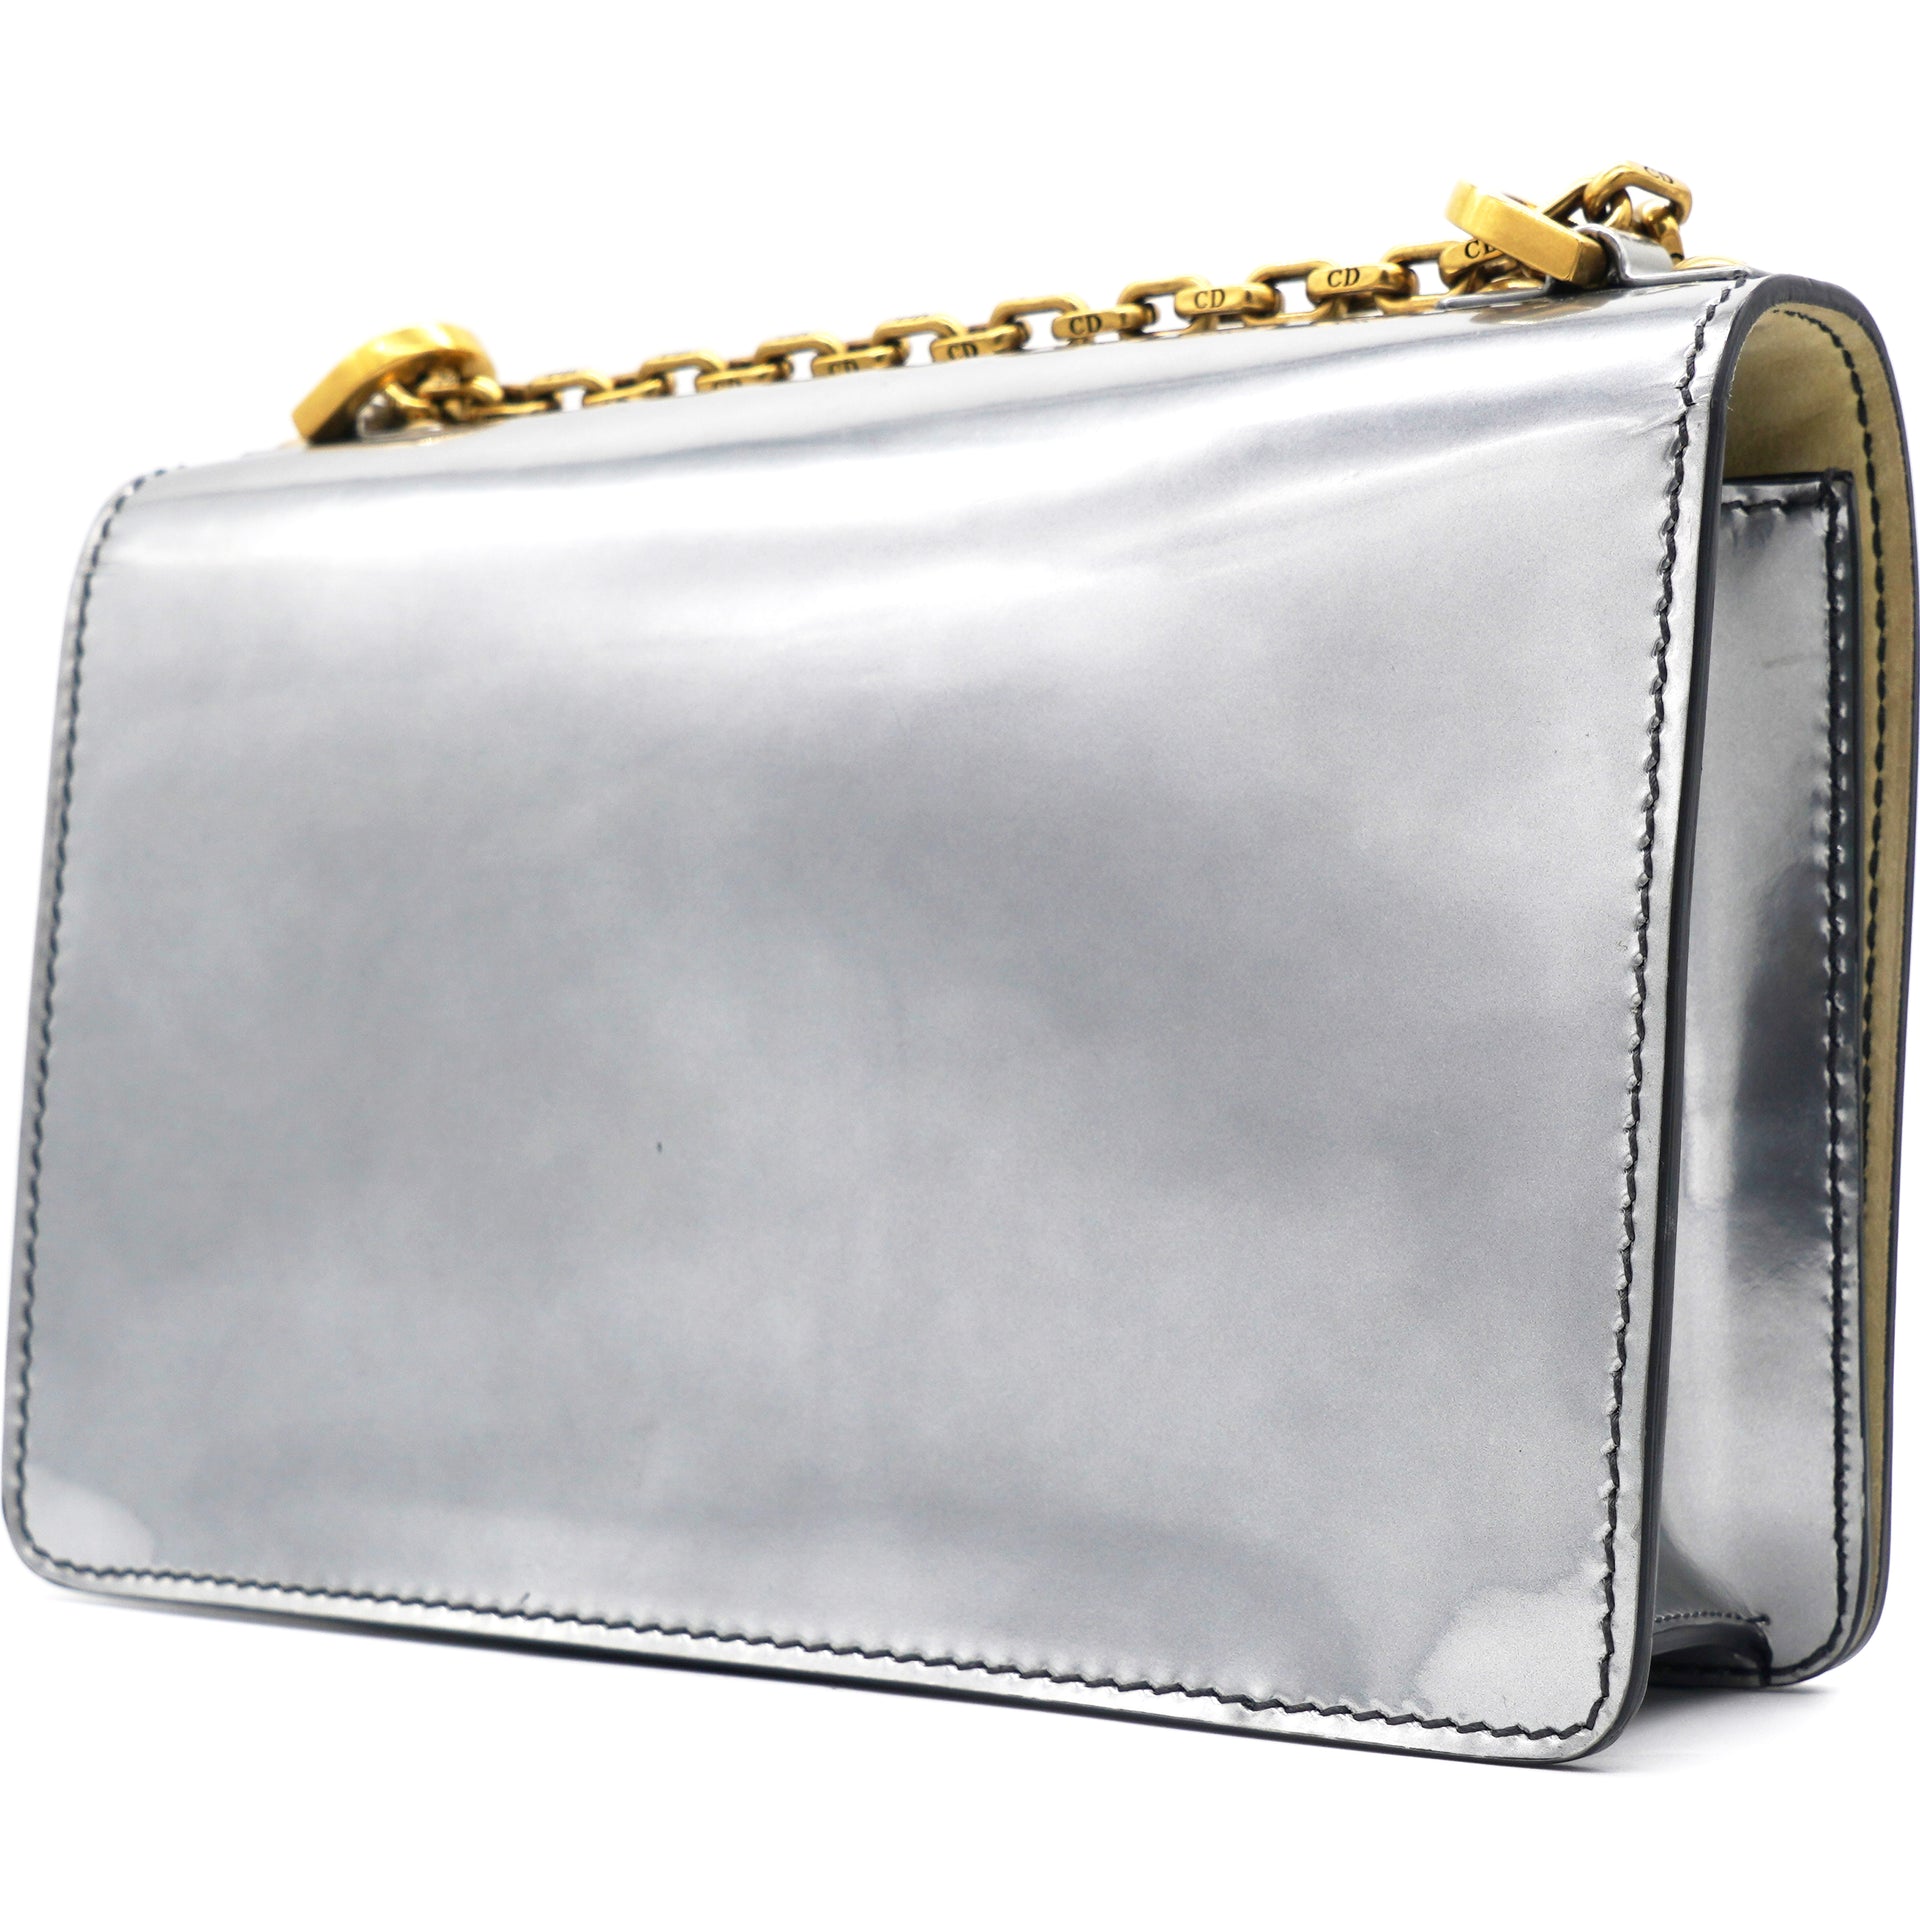 Jadior Metallic Silver Shoulder Bag